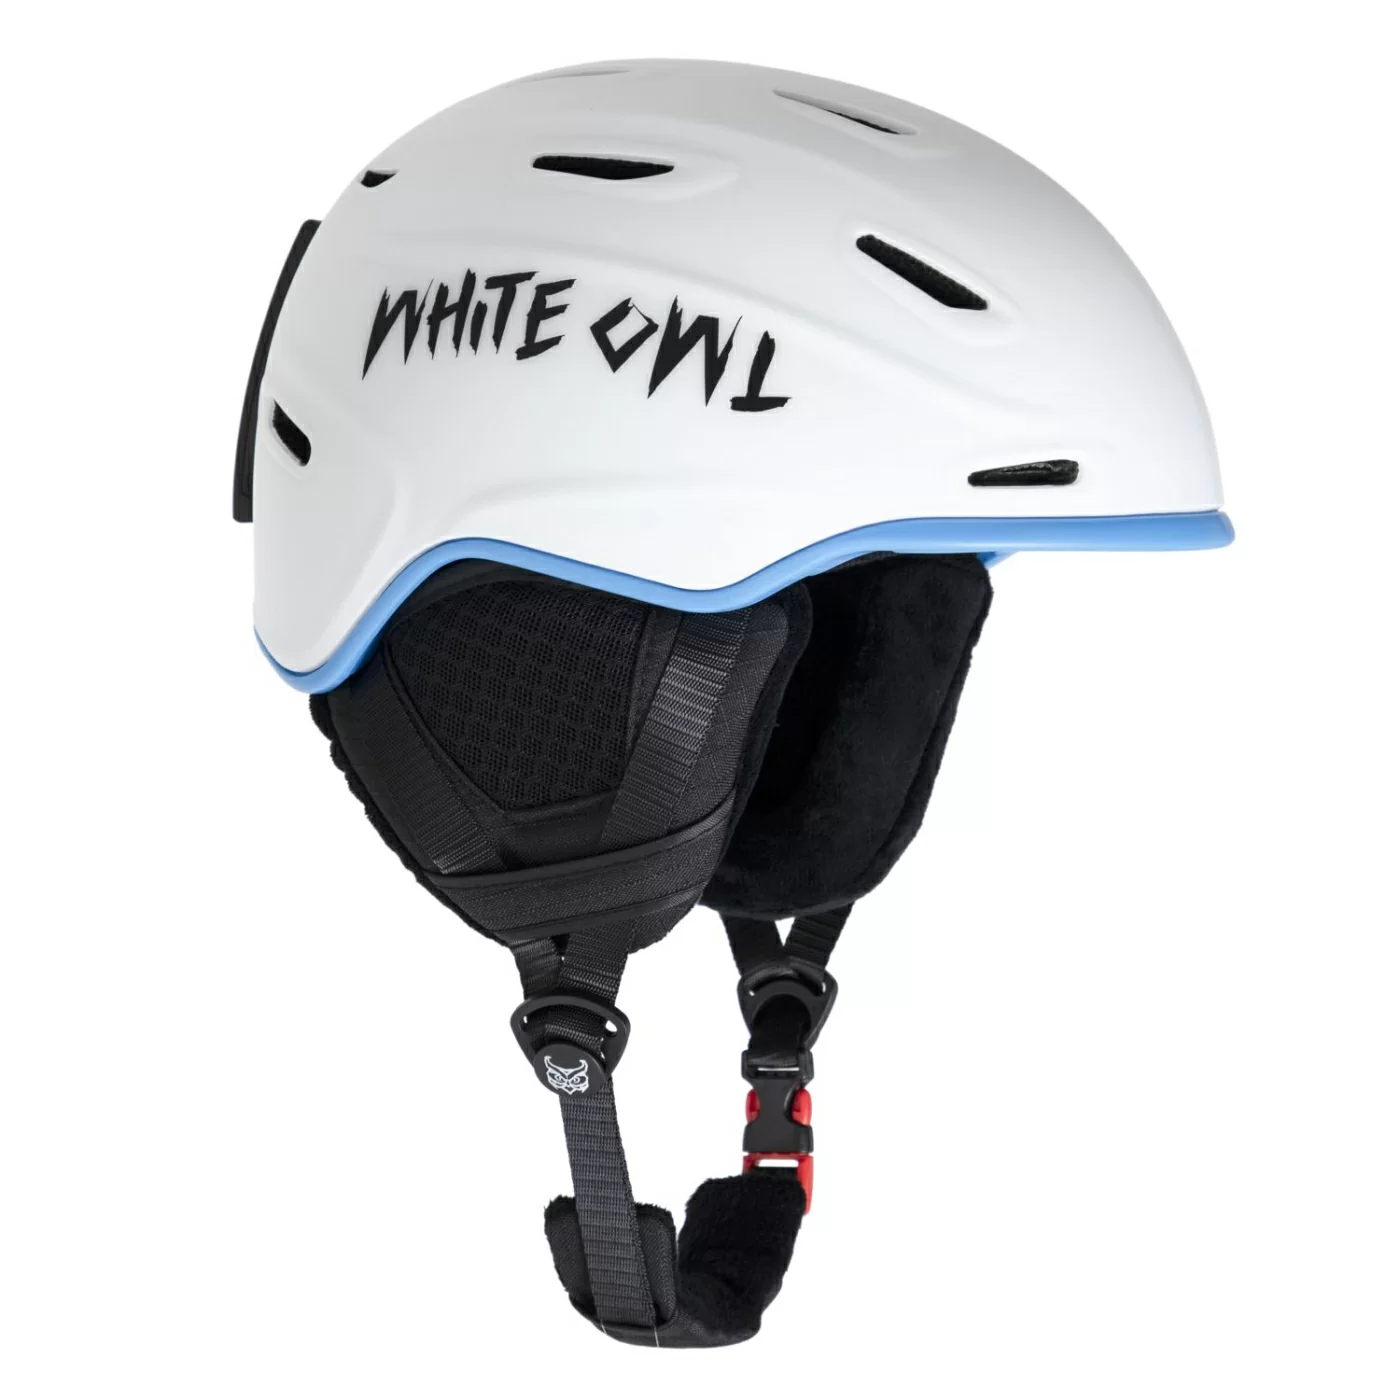 Реальное фото Шлем White Owl HK004 зимний 48-53см белый с синим  W112791 от магазина СпортСЕ